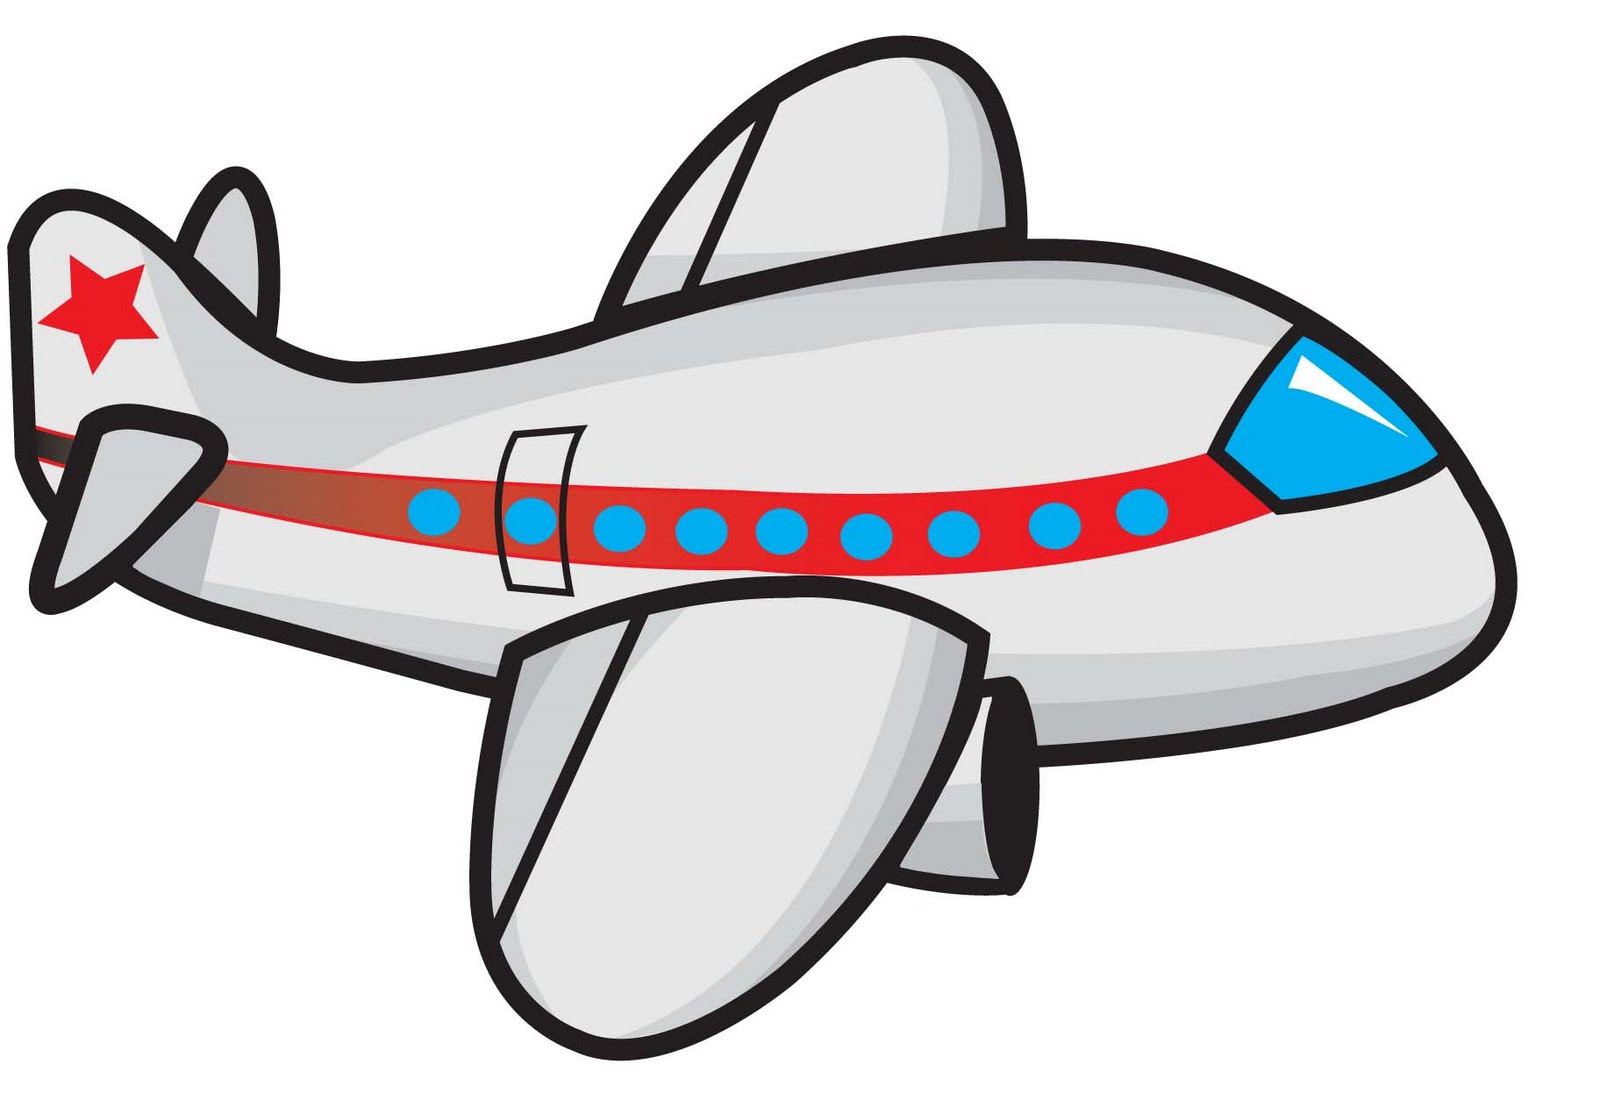 Aeroplane Cartoon - Cliparts.co